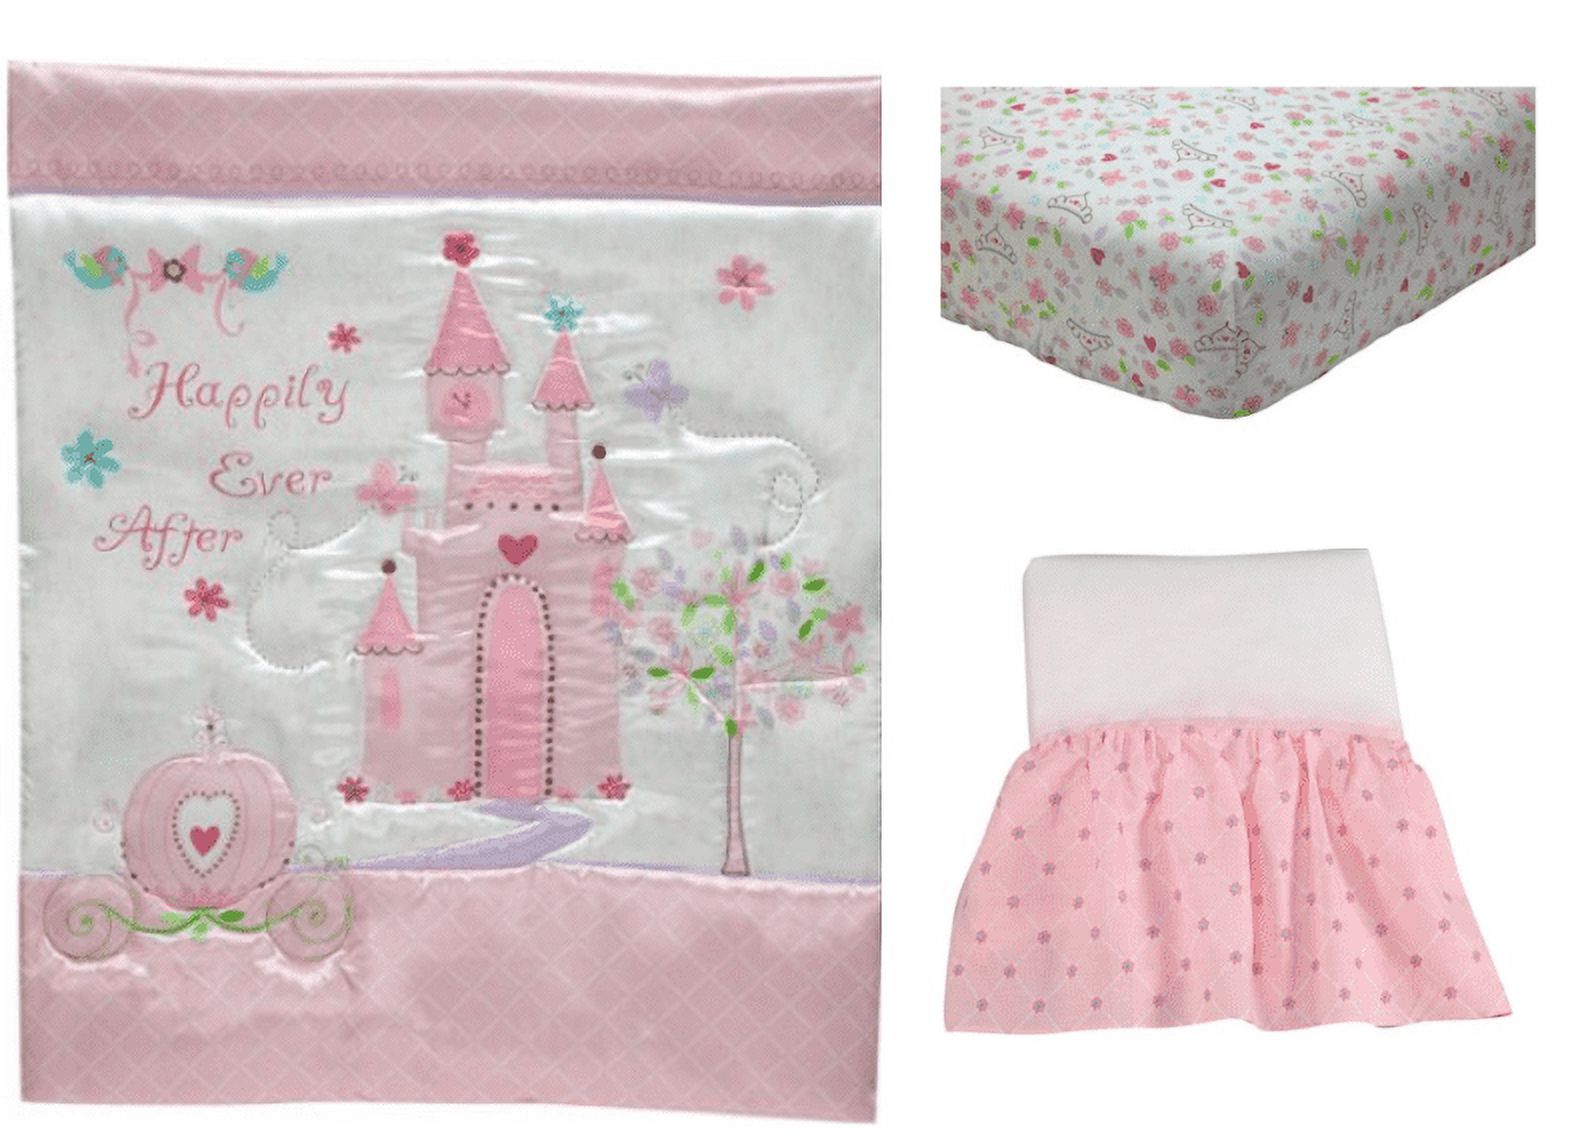 Disney Princess Happily Ever After 3 Piece Crib Bedding Set, Pink - image 2 of 5